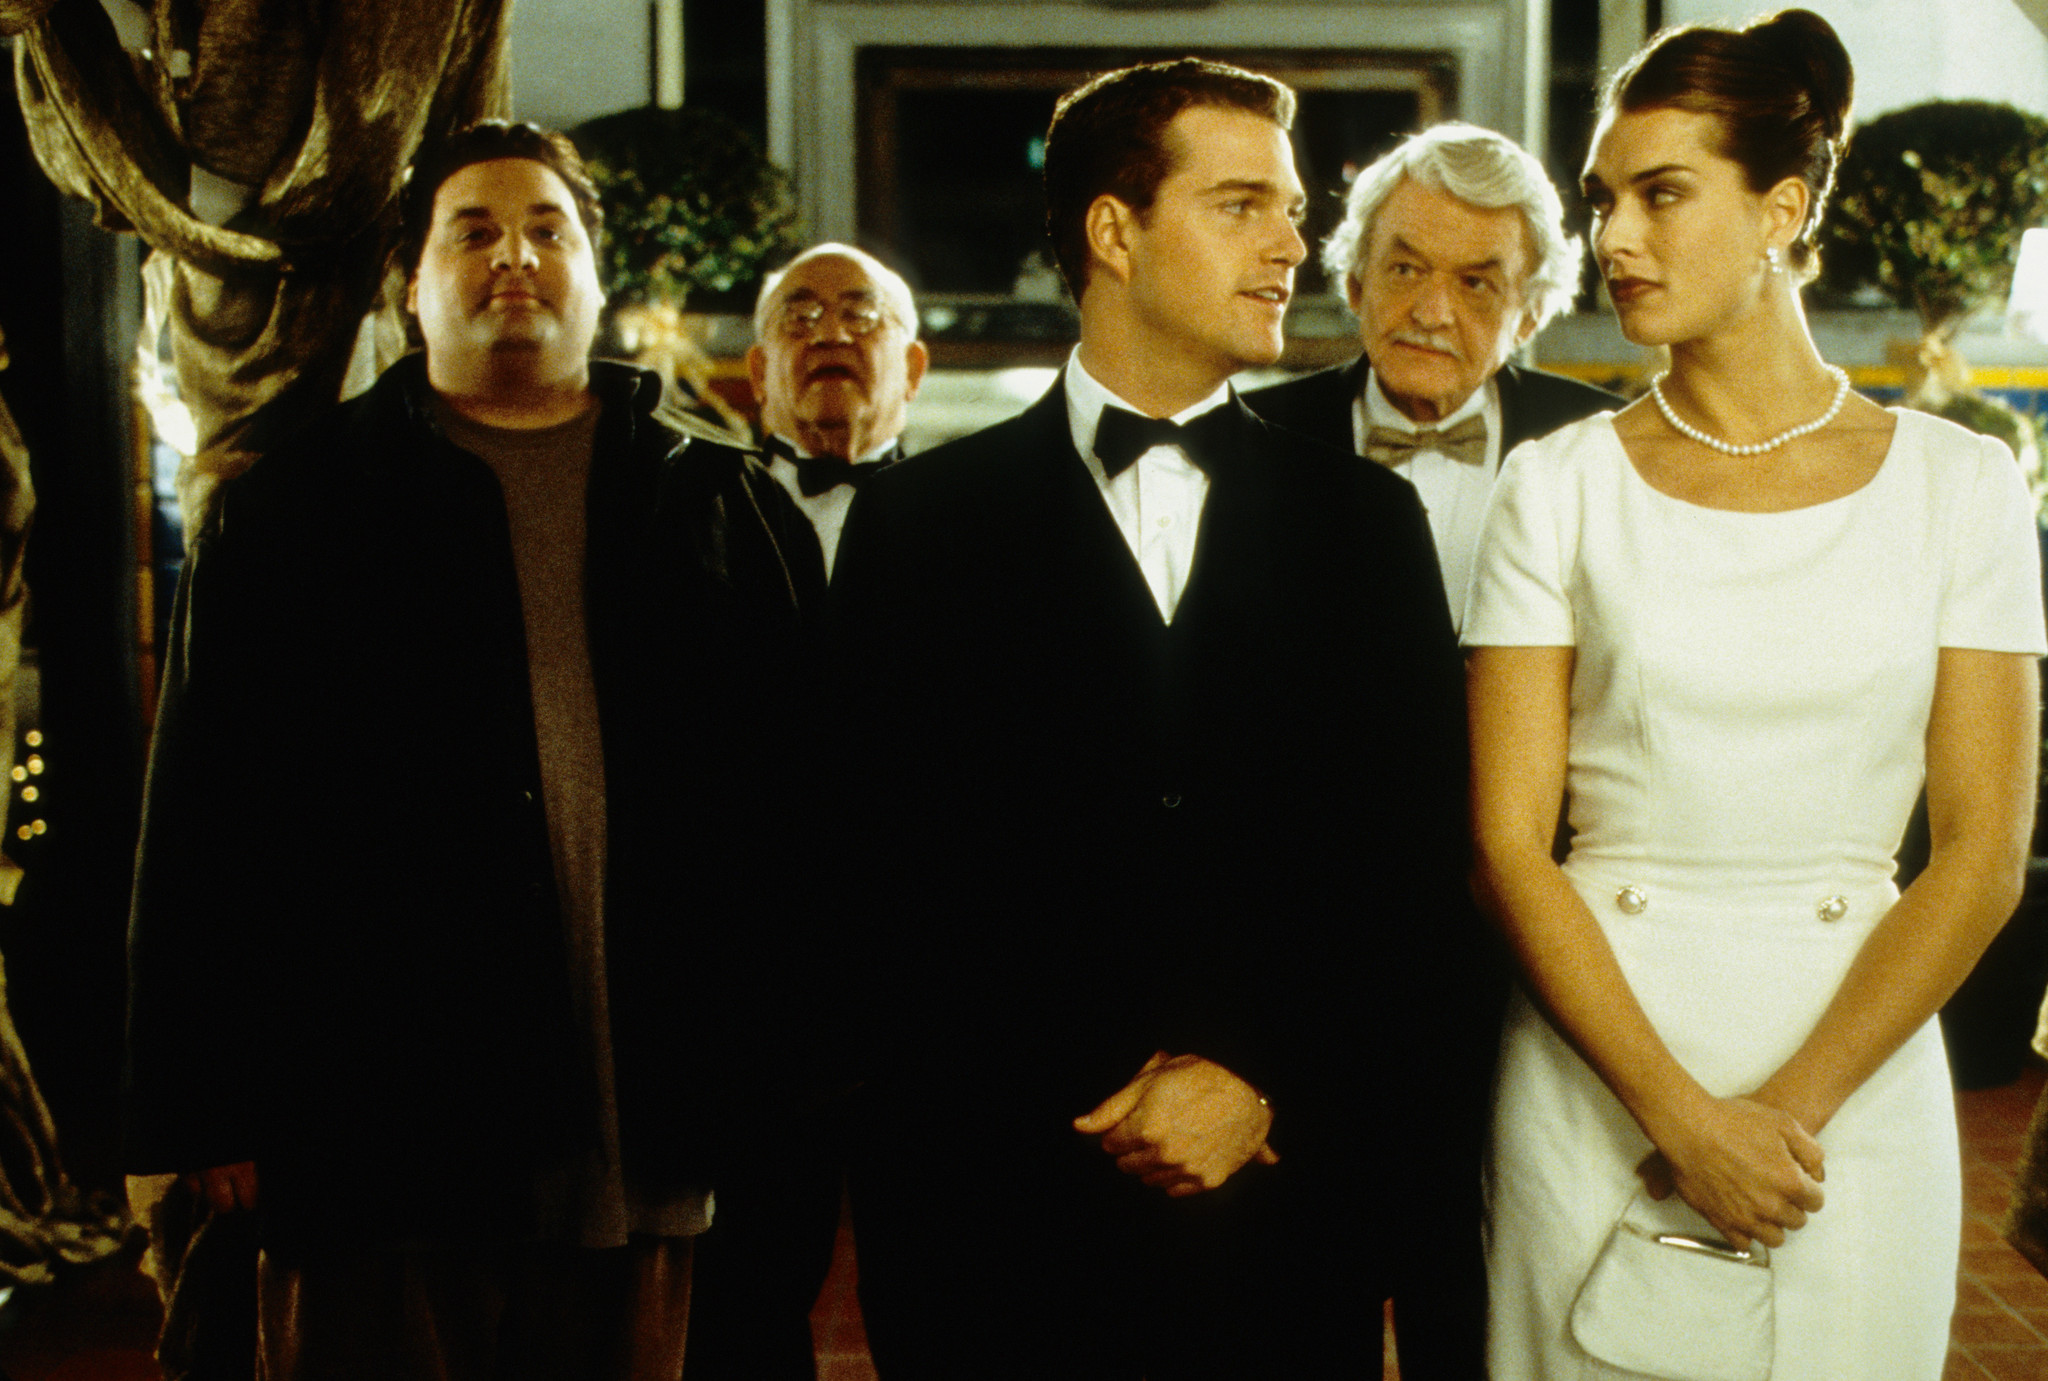 Still of Brooke Shields, Chris O'Donnell, Edward Asner, Hal Holbrook and Artie Lange in The Bachelor (1999)